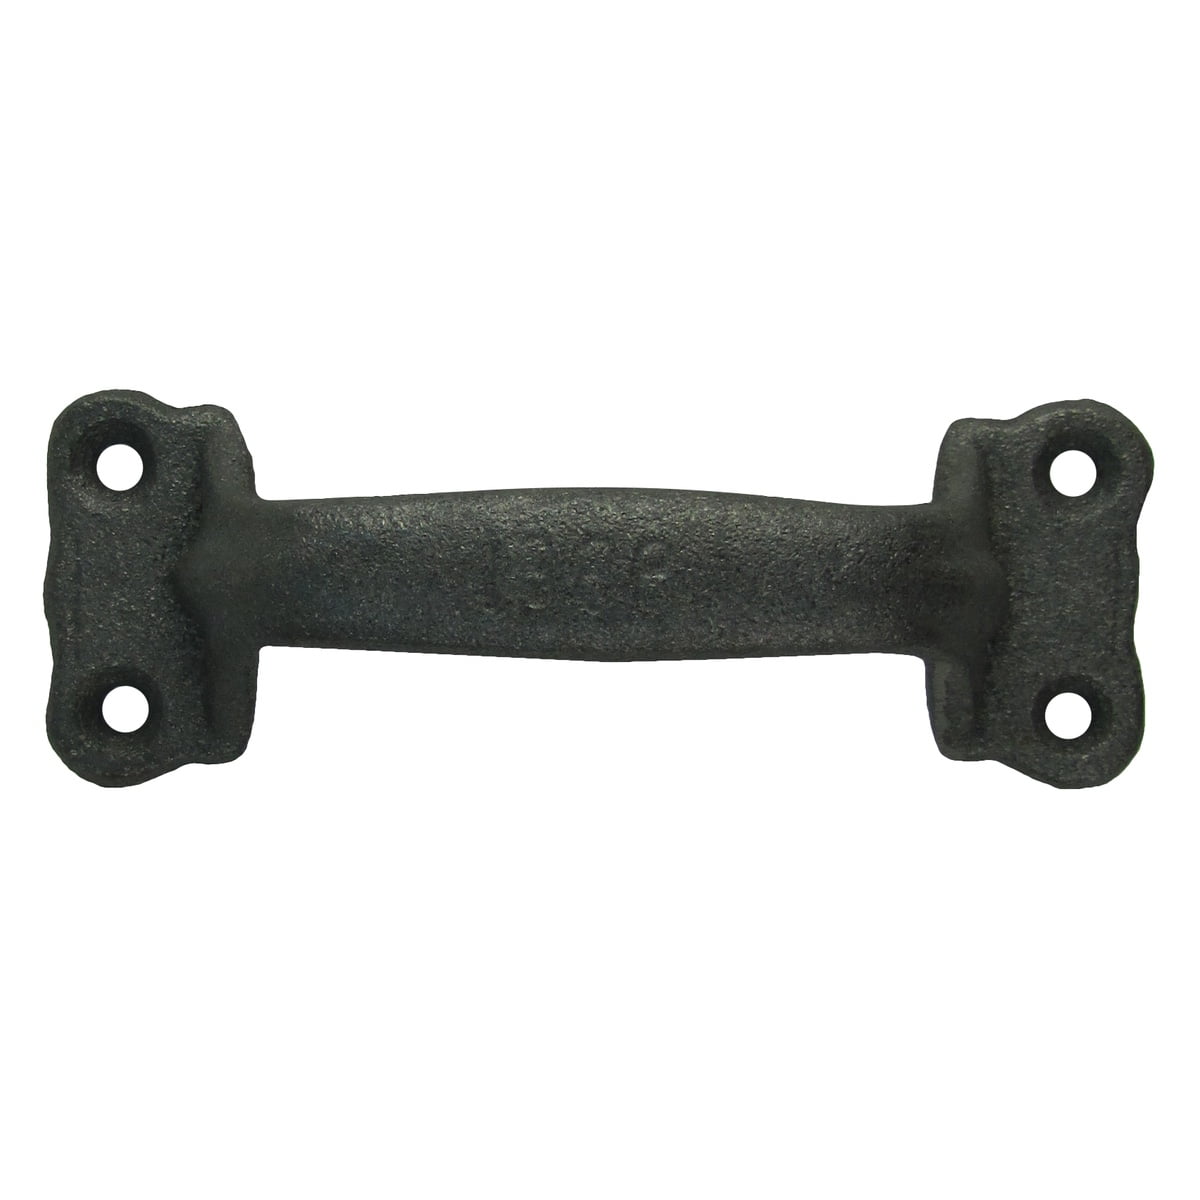 Black Rustic Iron Pull Entry Handles Stainless Steel Gate Pulls Heavy Duty Metal Door Handle for Grab